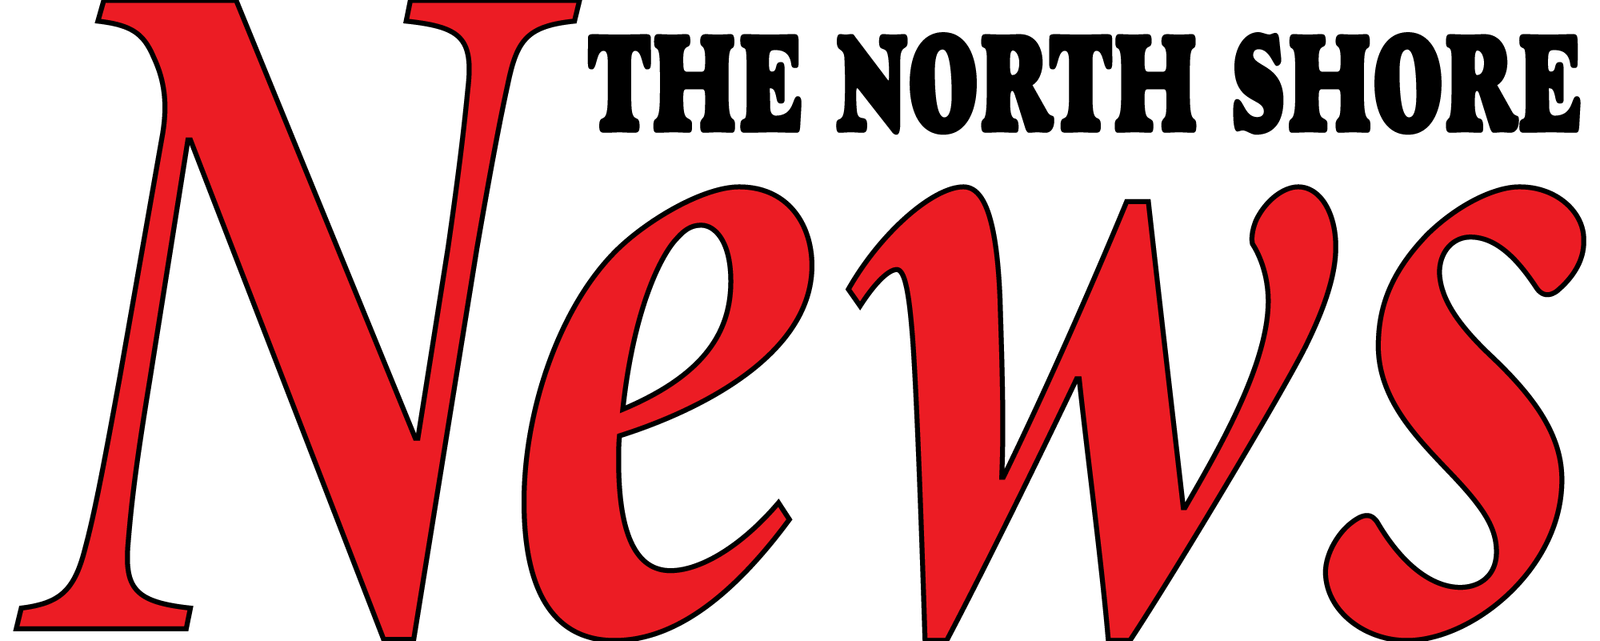 The North Shore News Logo